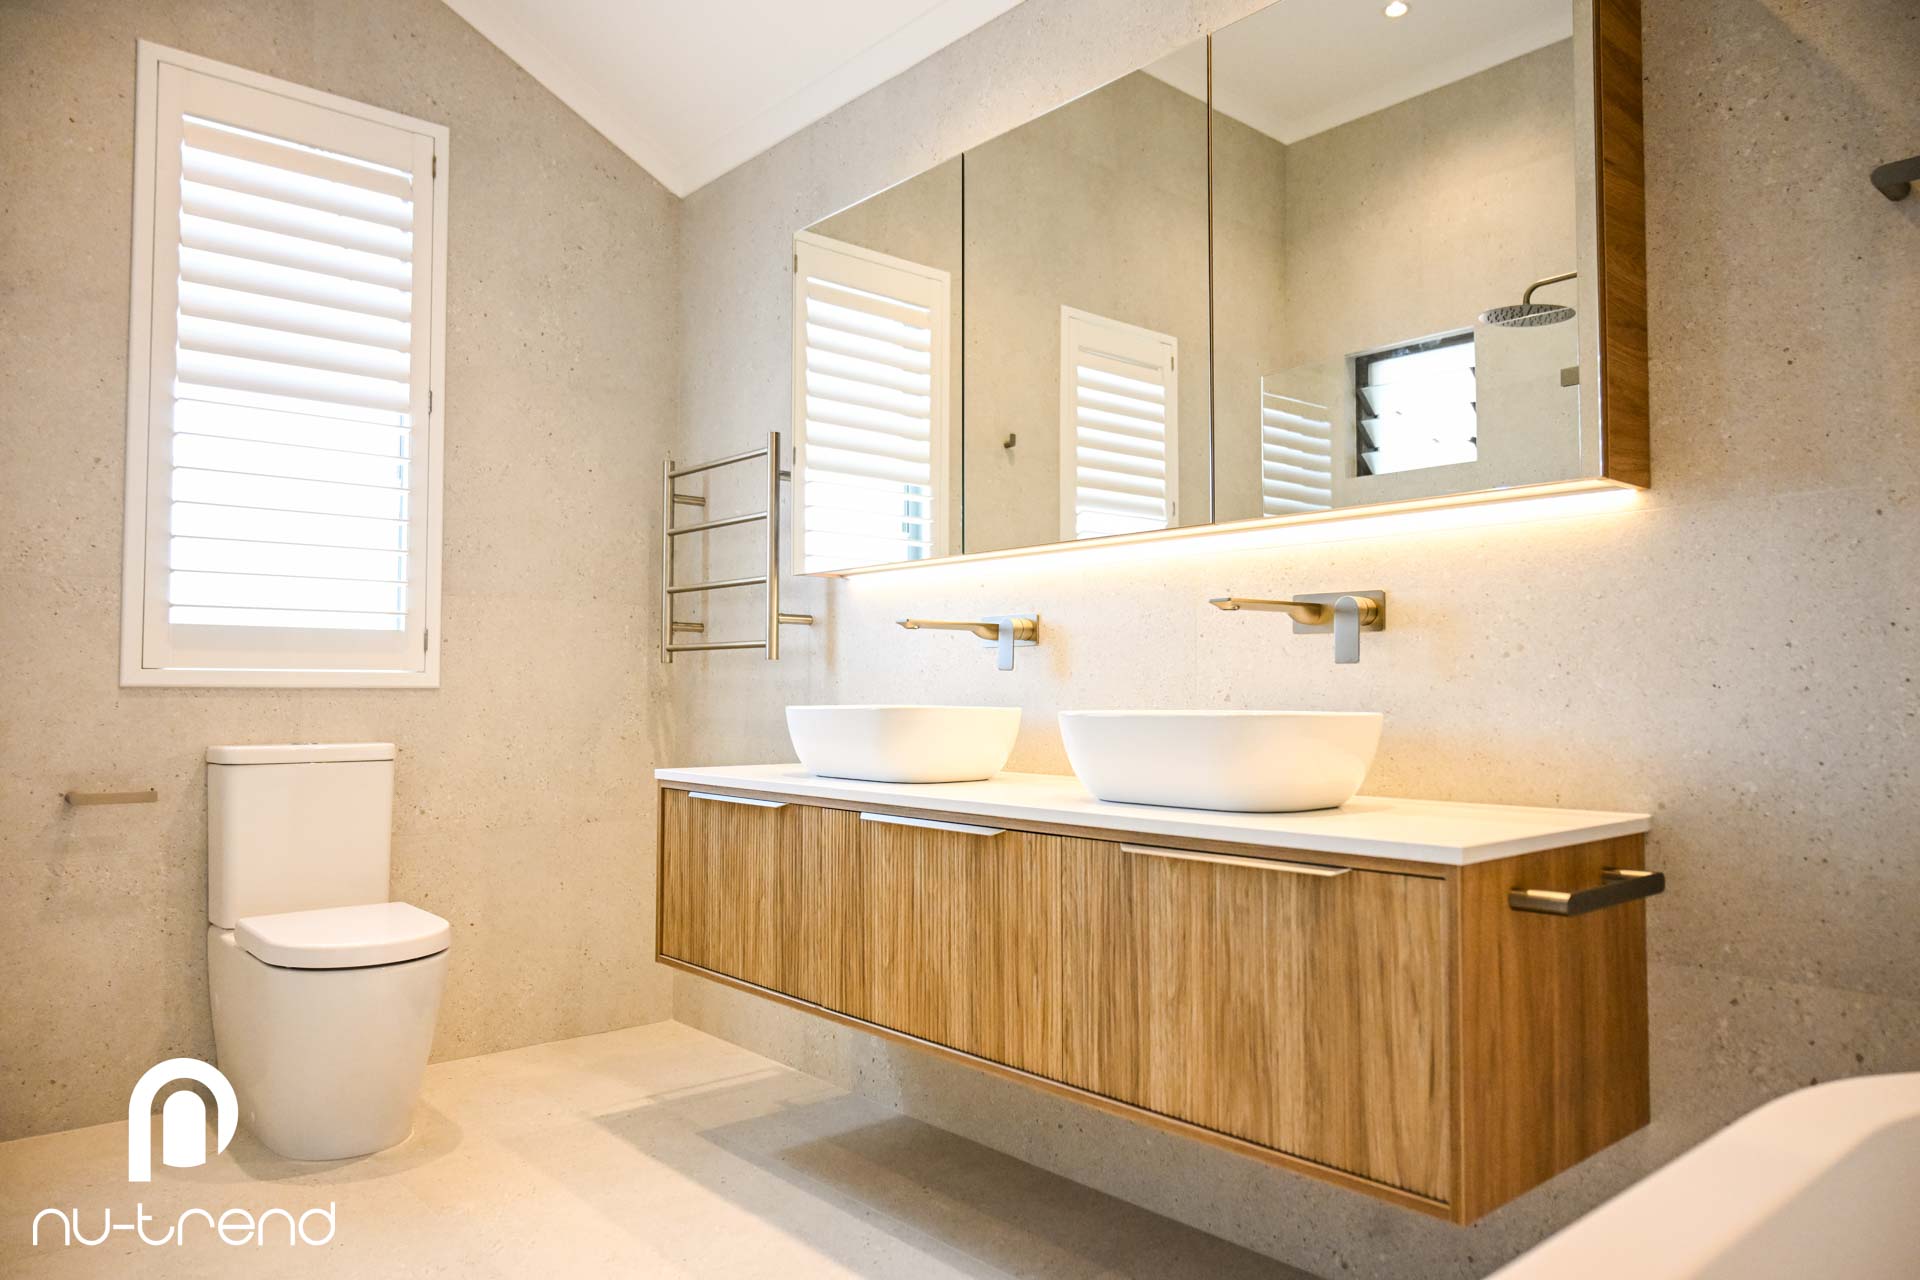 Bathroom renovation in Randwick with new toilet and vanity